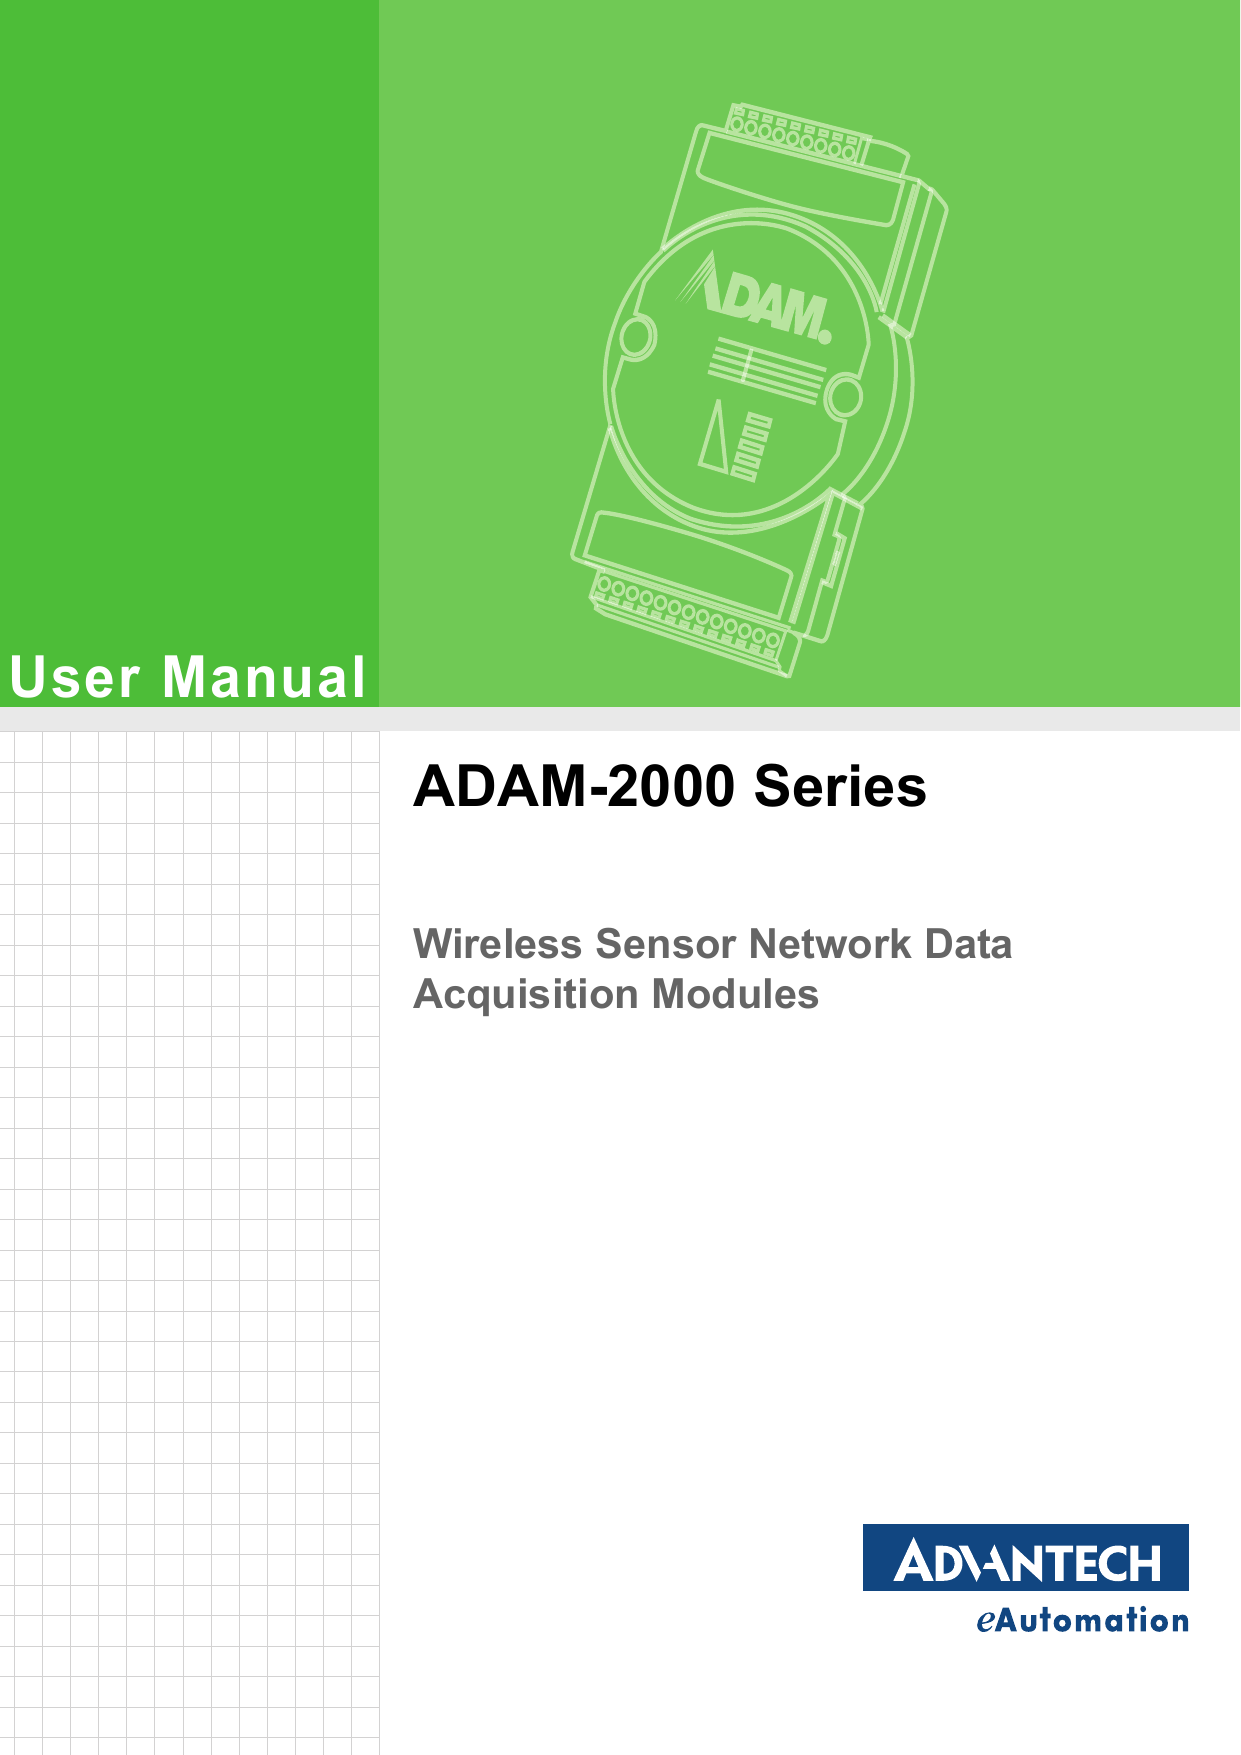 User ManualADAM-2000 SeriesWireless Sensor Network Data Acquisition Modules